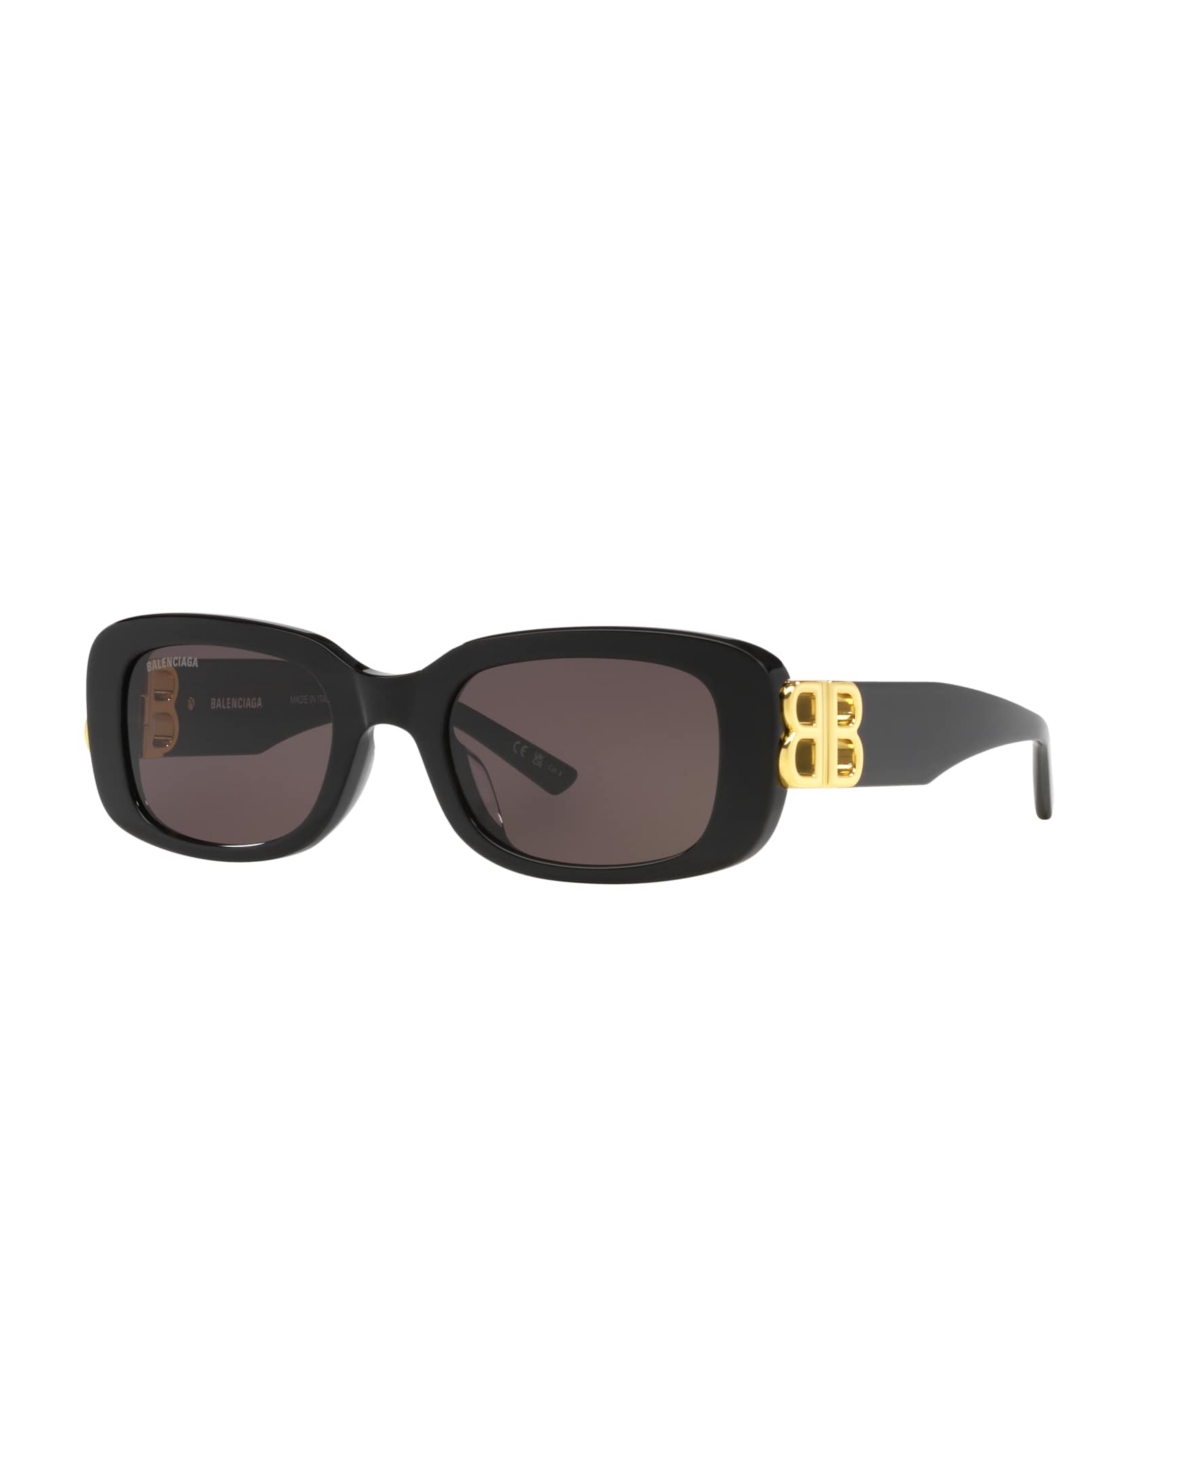 Women's Sunglasses, Bb0310Sk 6E000317 - Tortoise